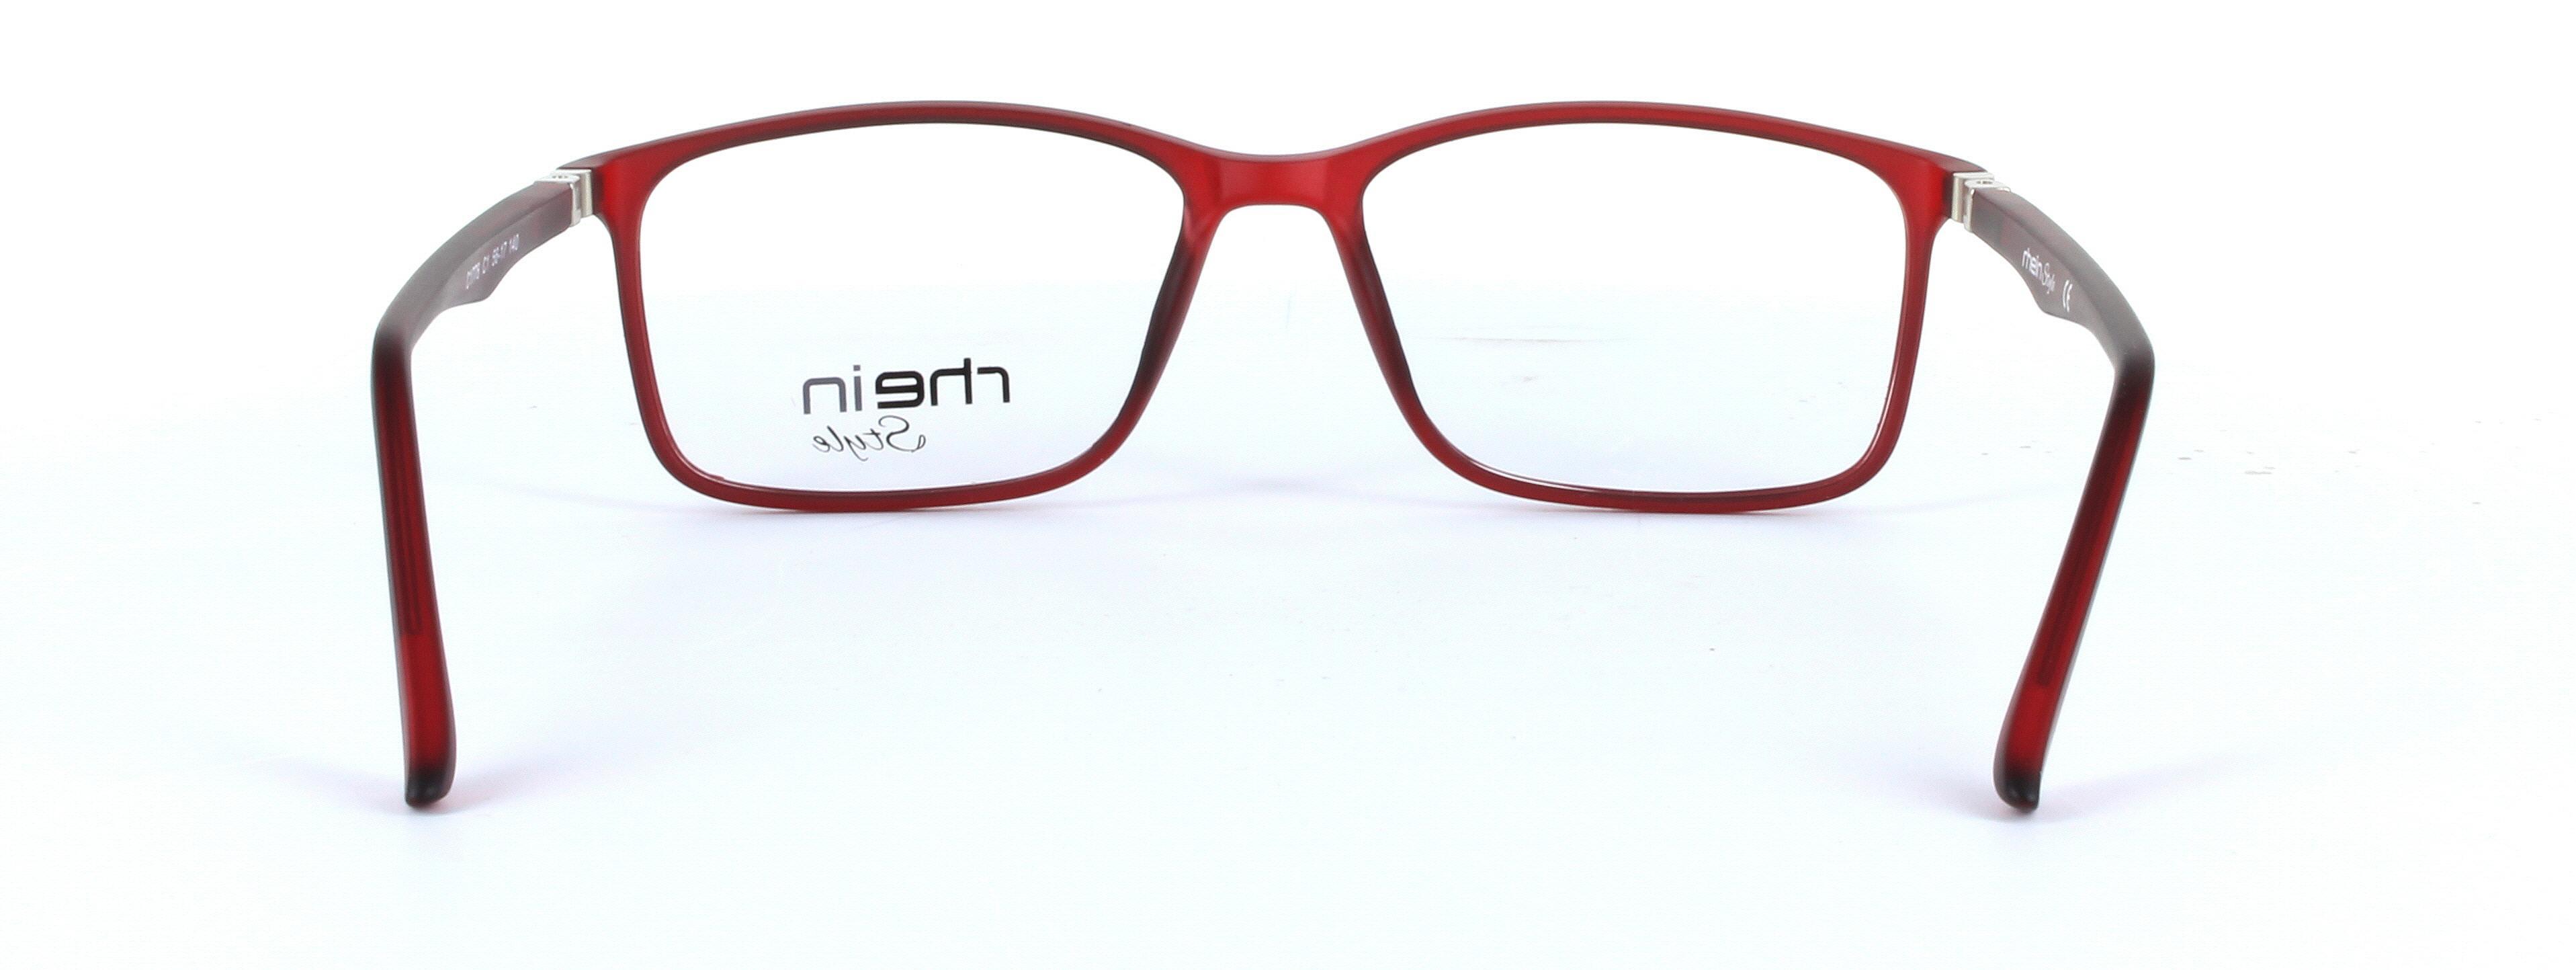 Franky Reddish Brown Full Rim Oval Rectangular Plastic Glasses - Image View 3